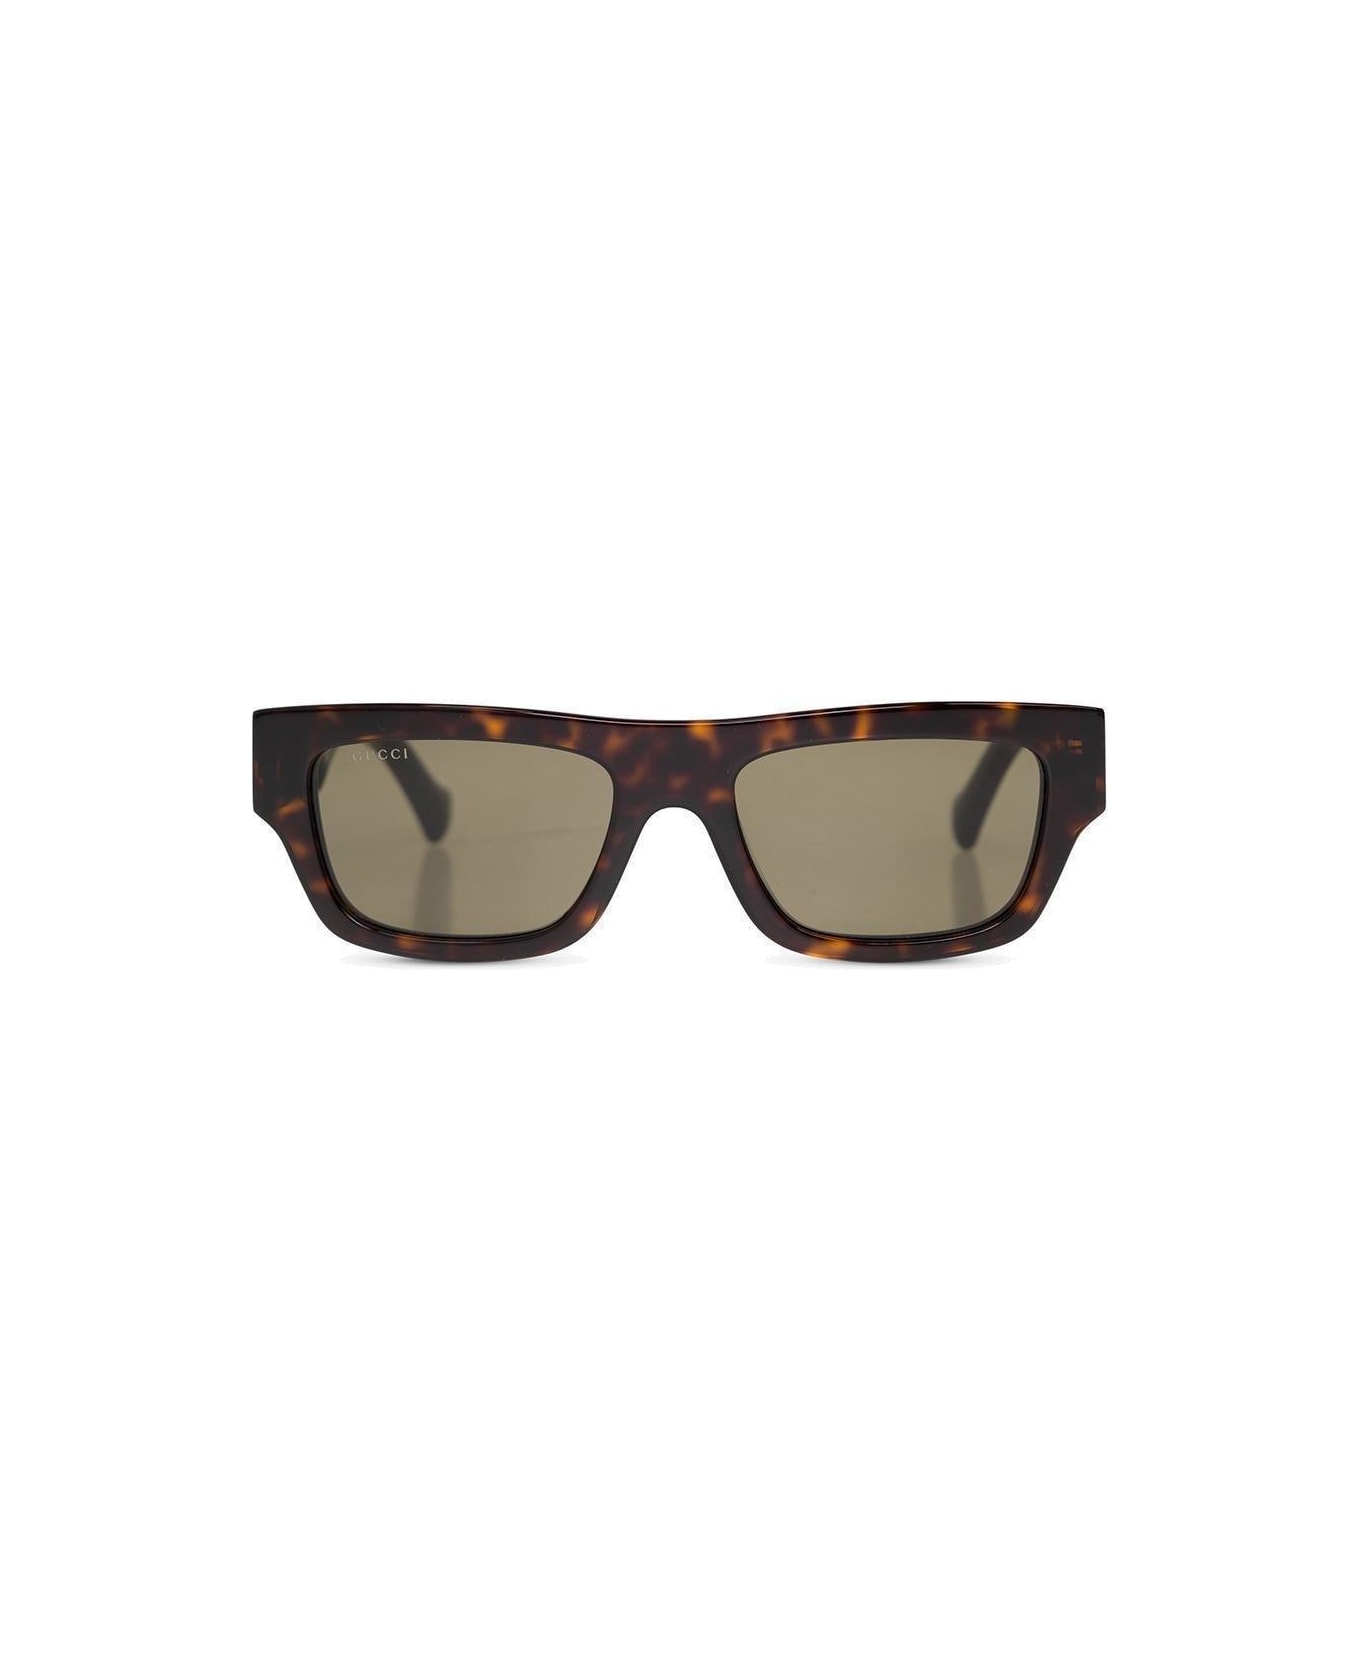 Gucci Eyewear Squared Frame Sunglasses